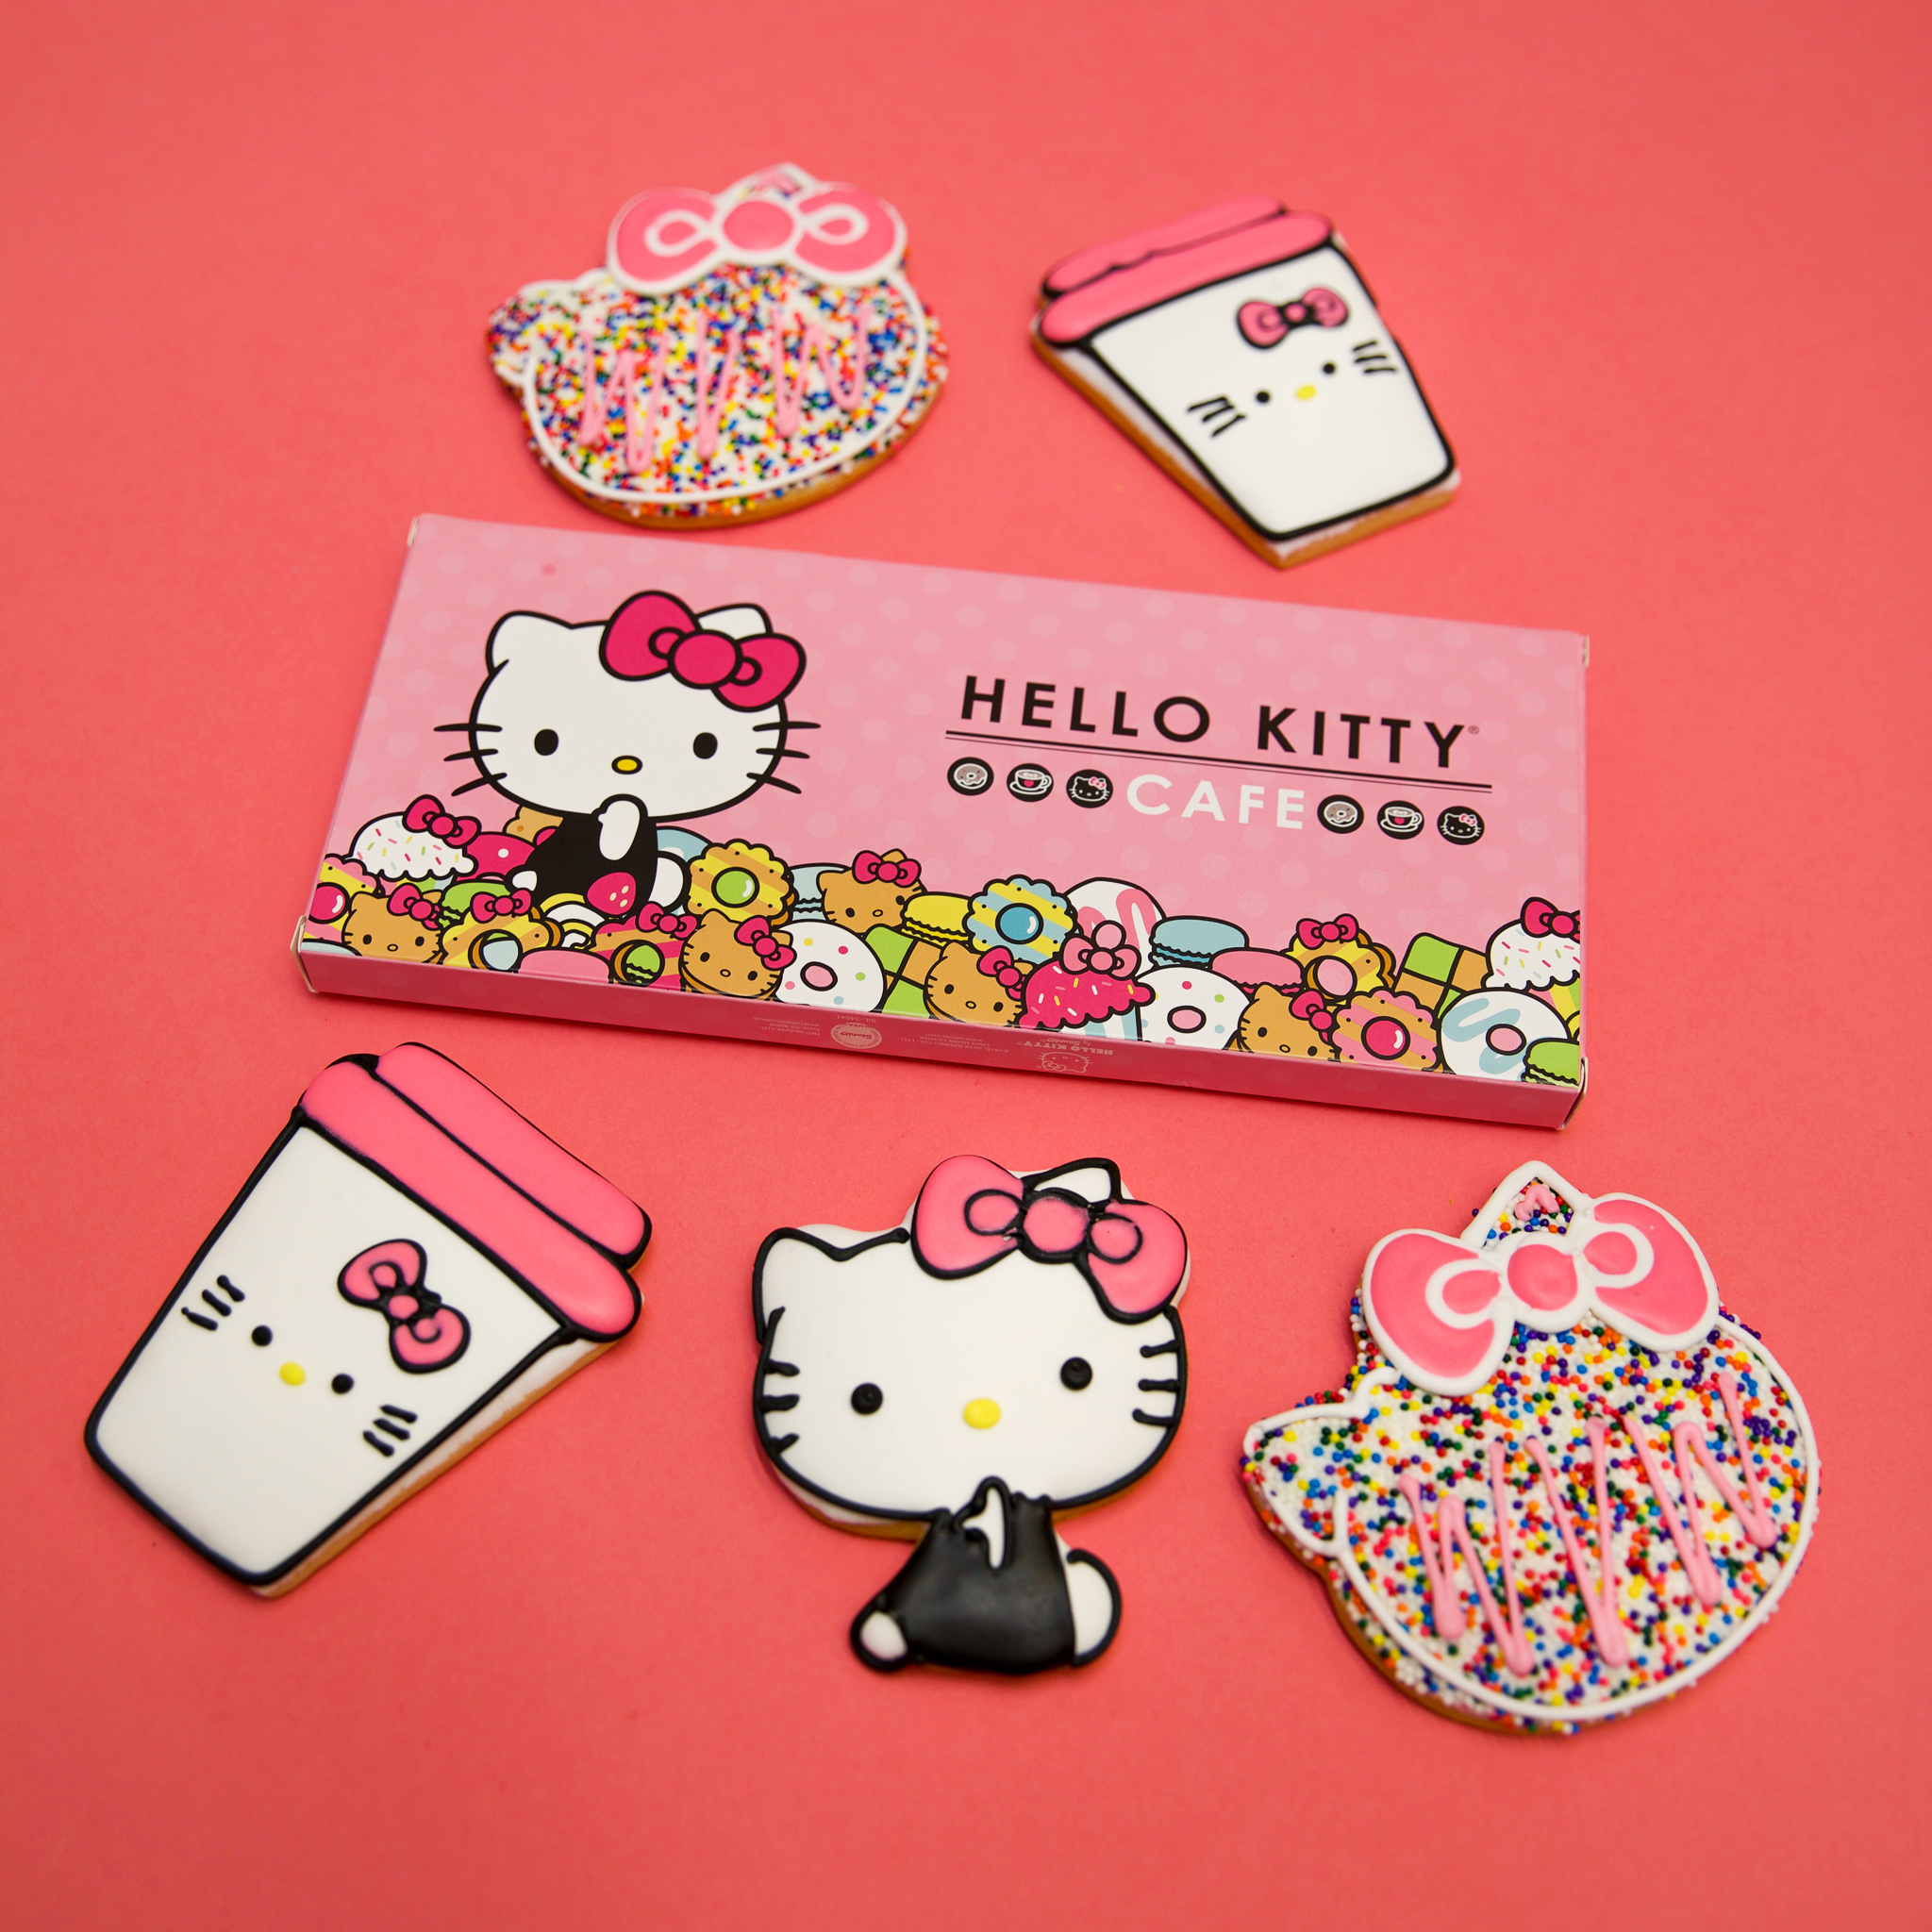 Hello Kitty Cafe Truck Menu  Hello kitty, Fondos de hello kitty